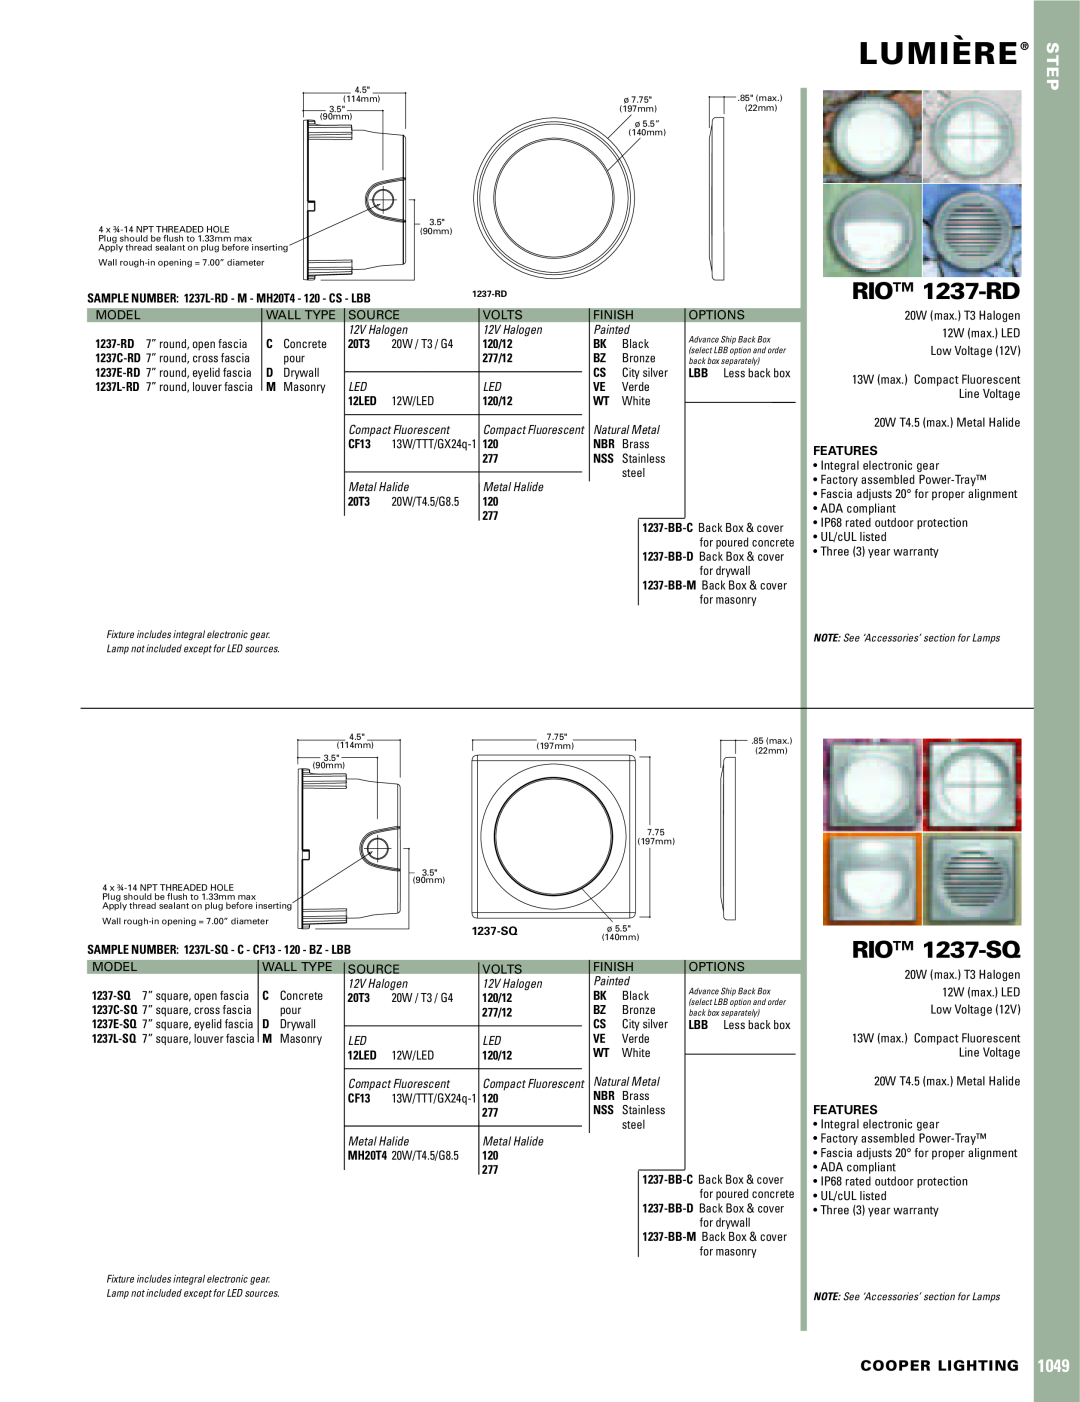 Cooper Lighting 1049 warranty Lumiere`, RIO 1237-RD, RIO 1237-SQ, Step, Cooper Lighting 